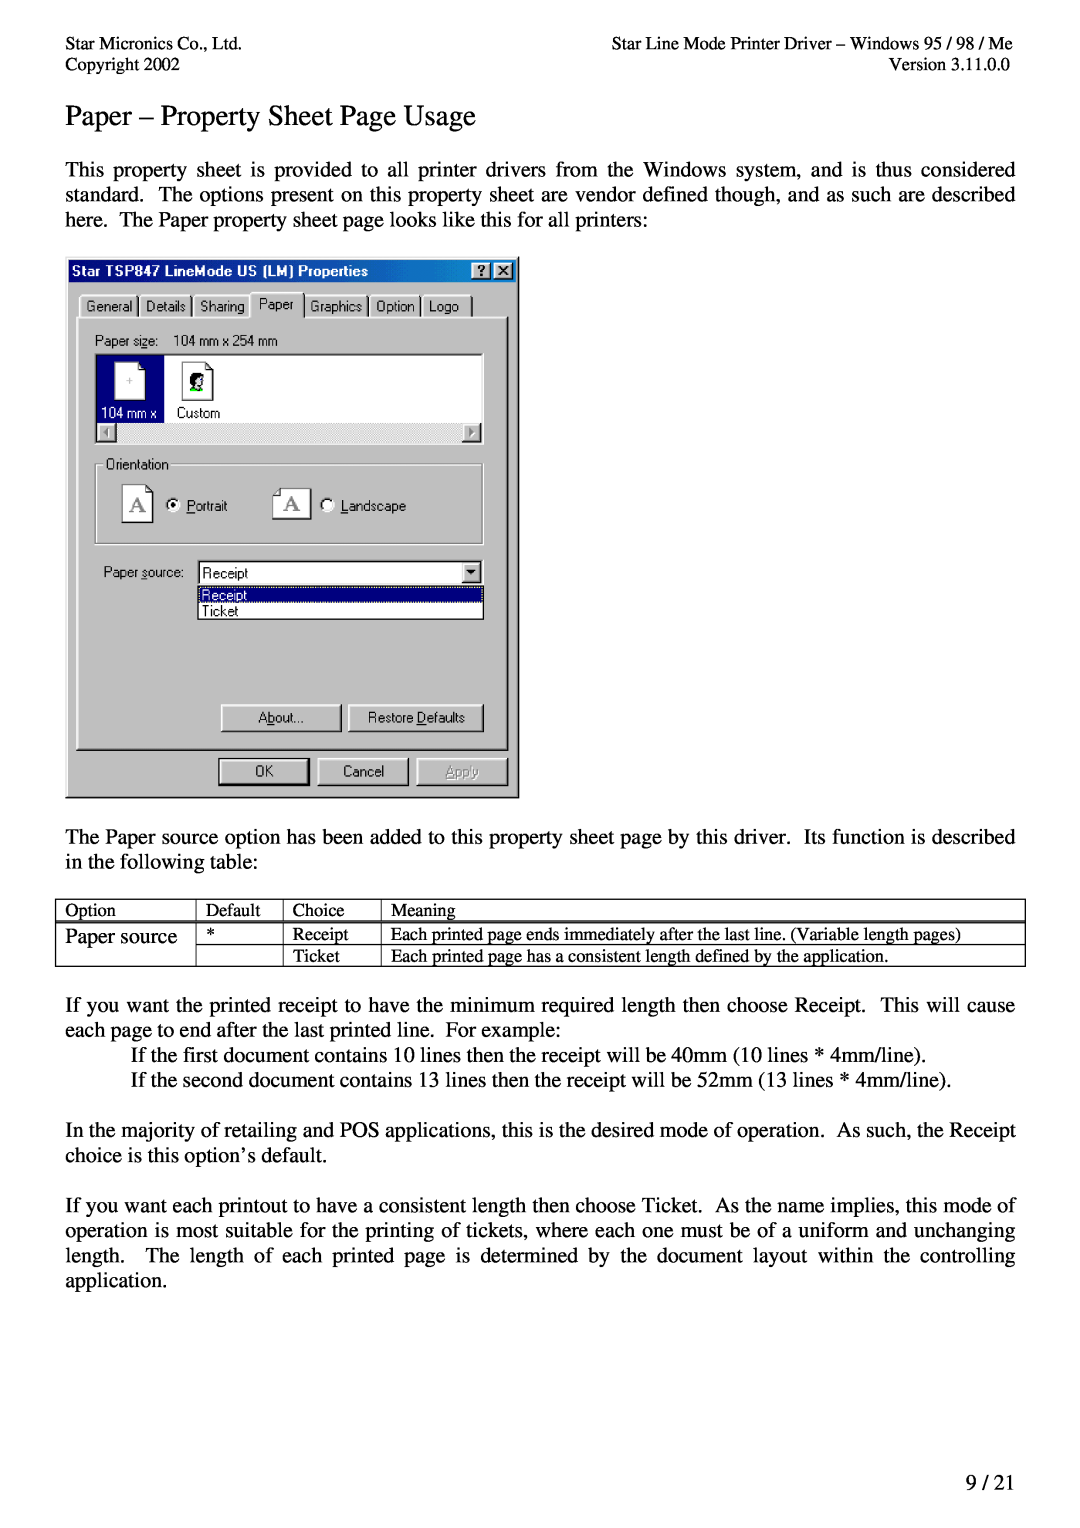 Star Micronics TUP992 user manual Paper - Property Sheet Page Usage 